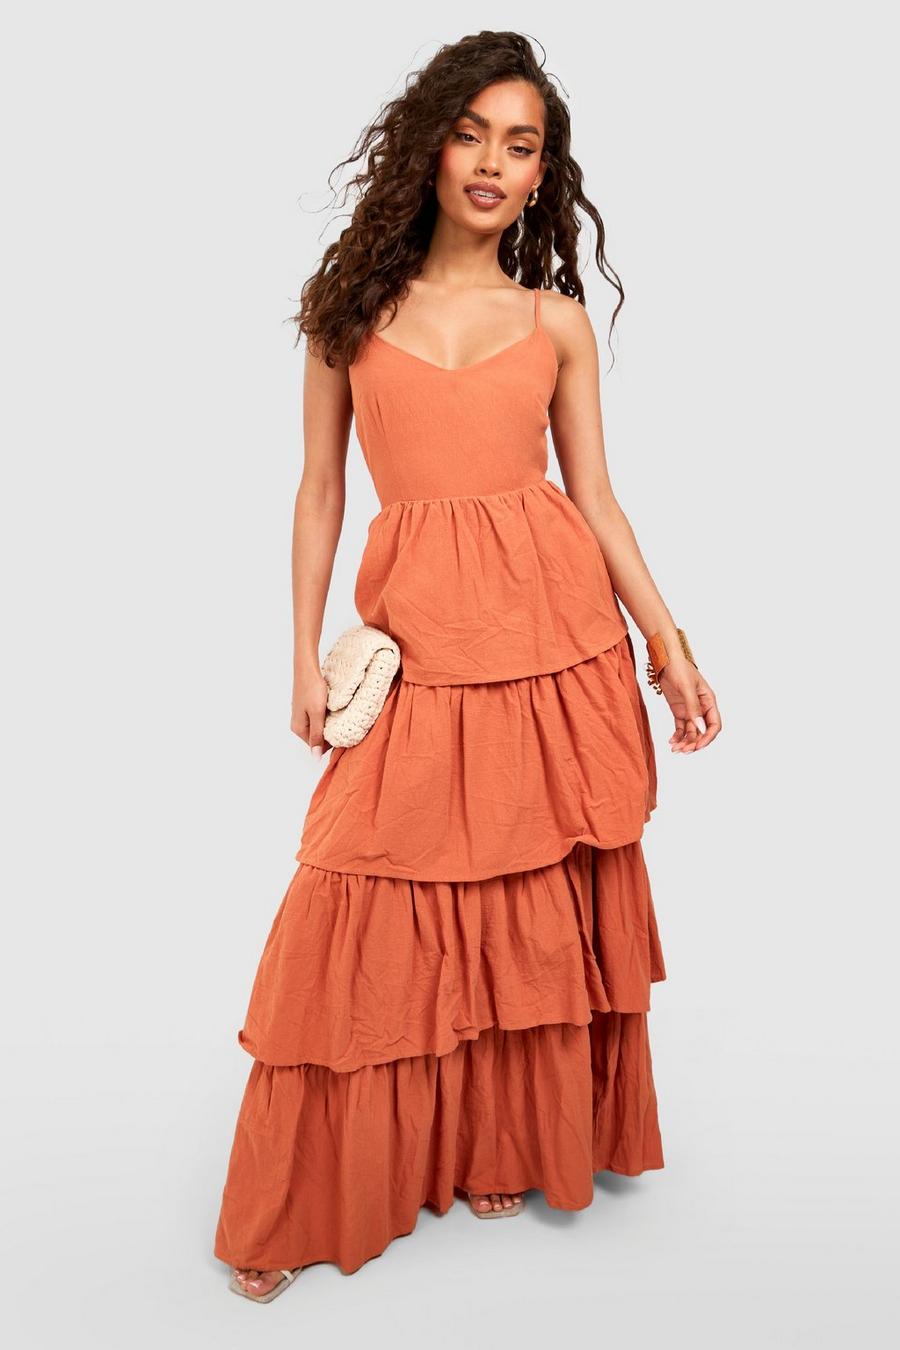 Finelylove Long Boho Dress For Women Long Maxi Dress Boho Long Short Sleeve  Geometric Orange XL 